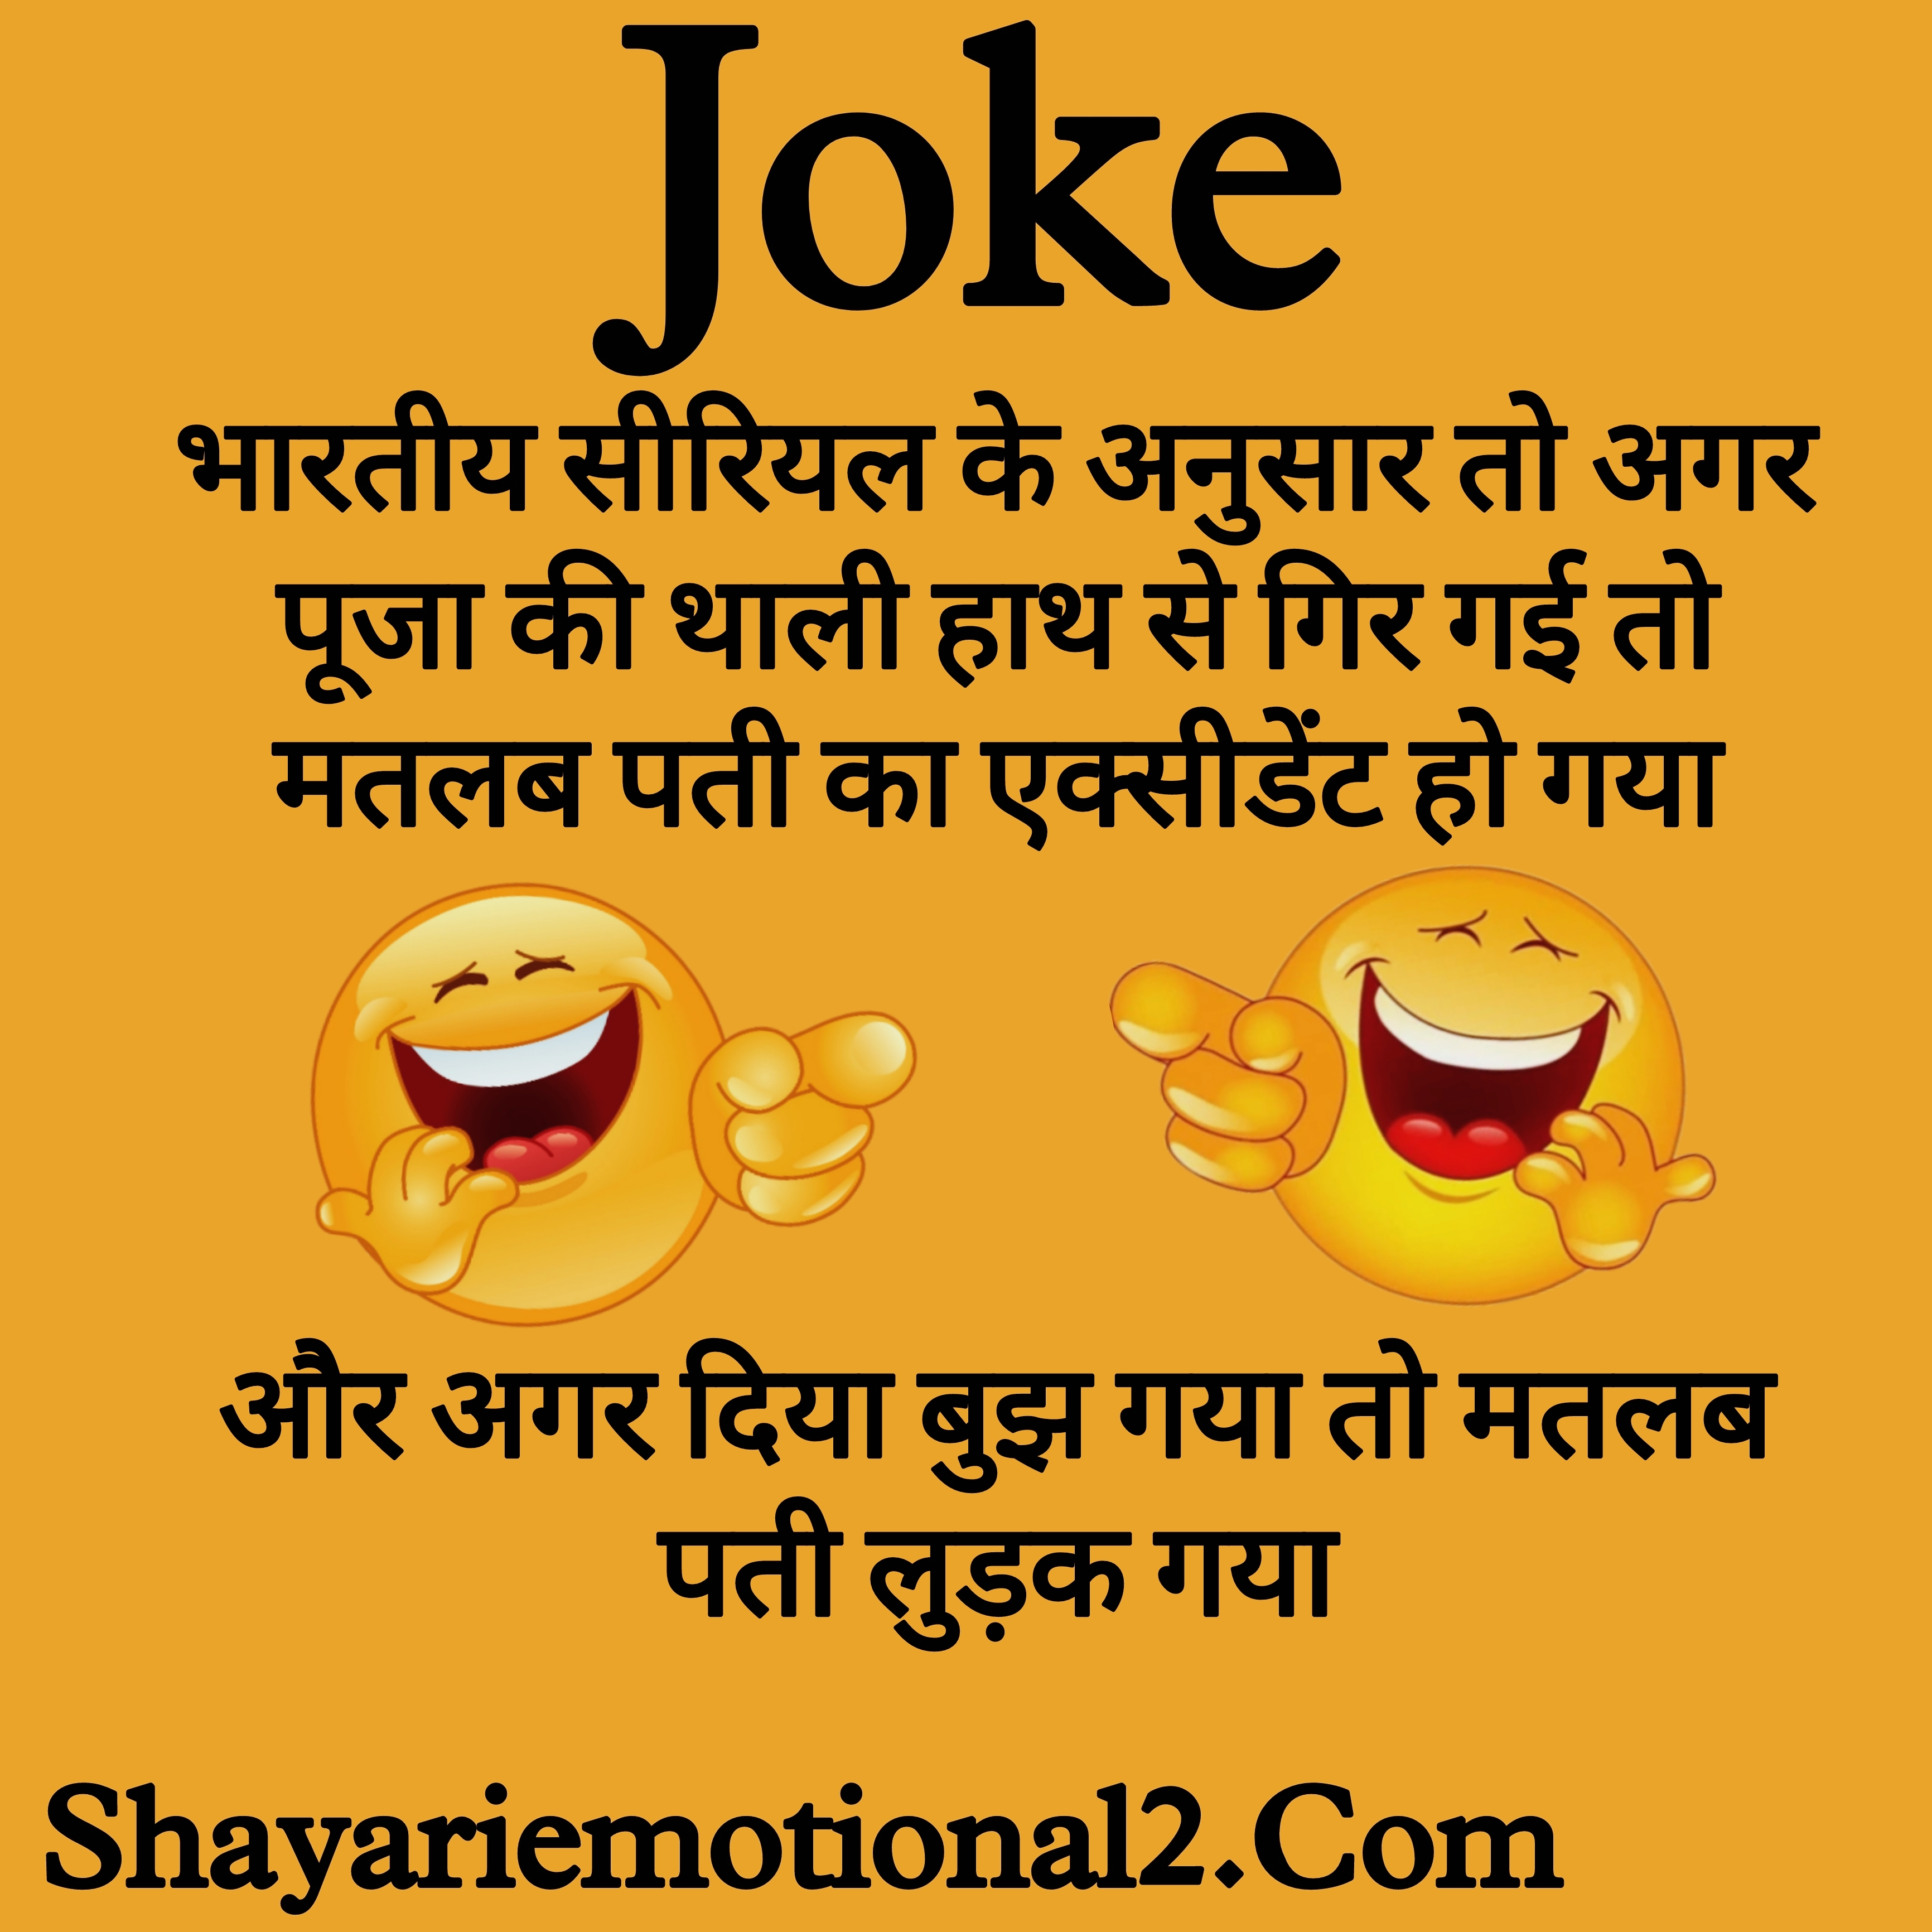 Comedy Jokes In Hindi For WhatsApp